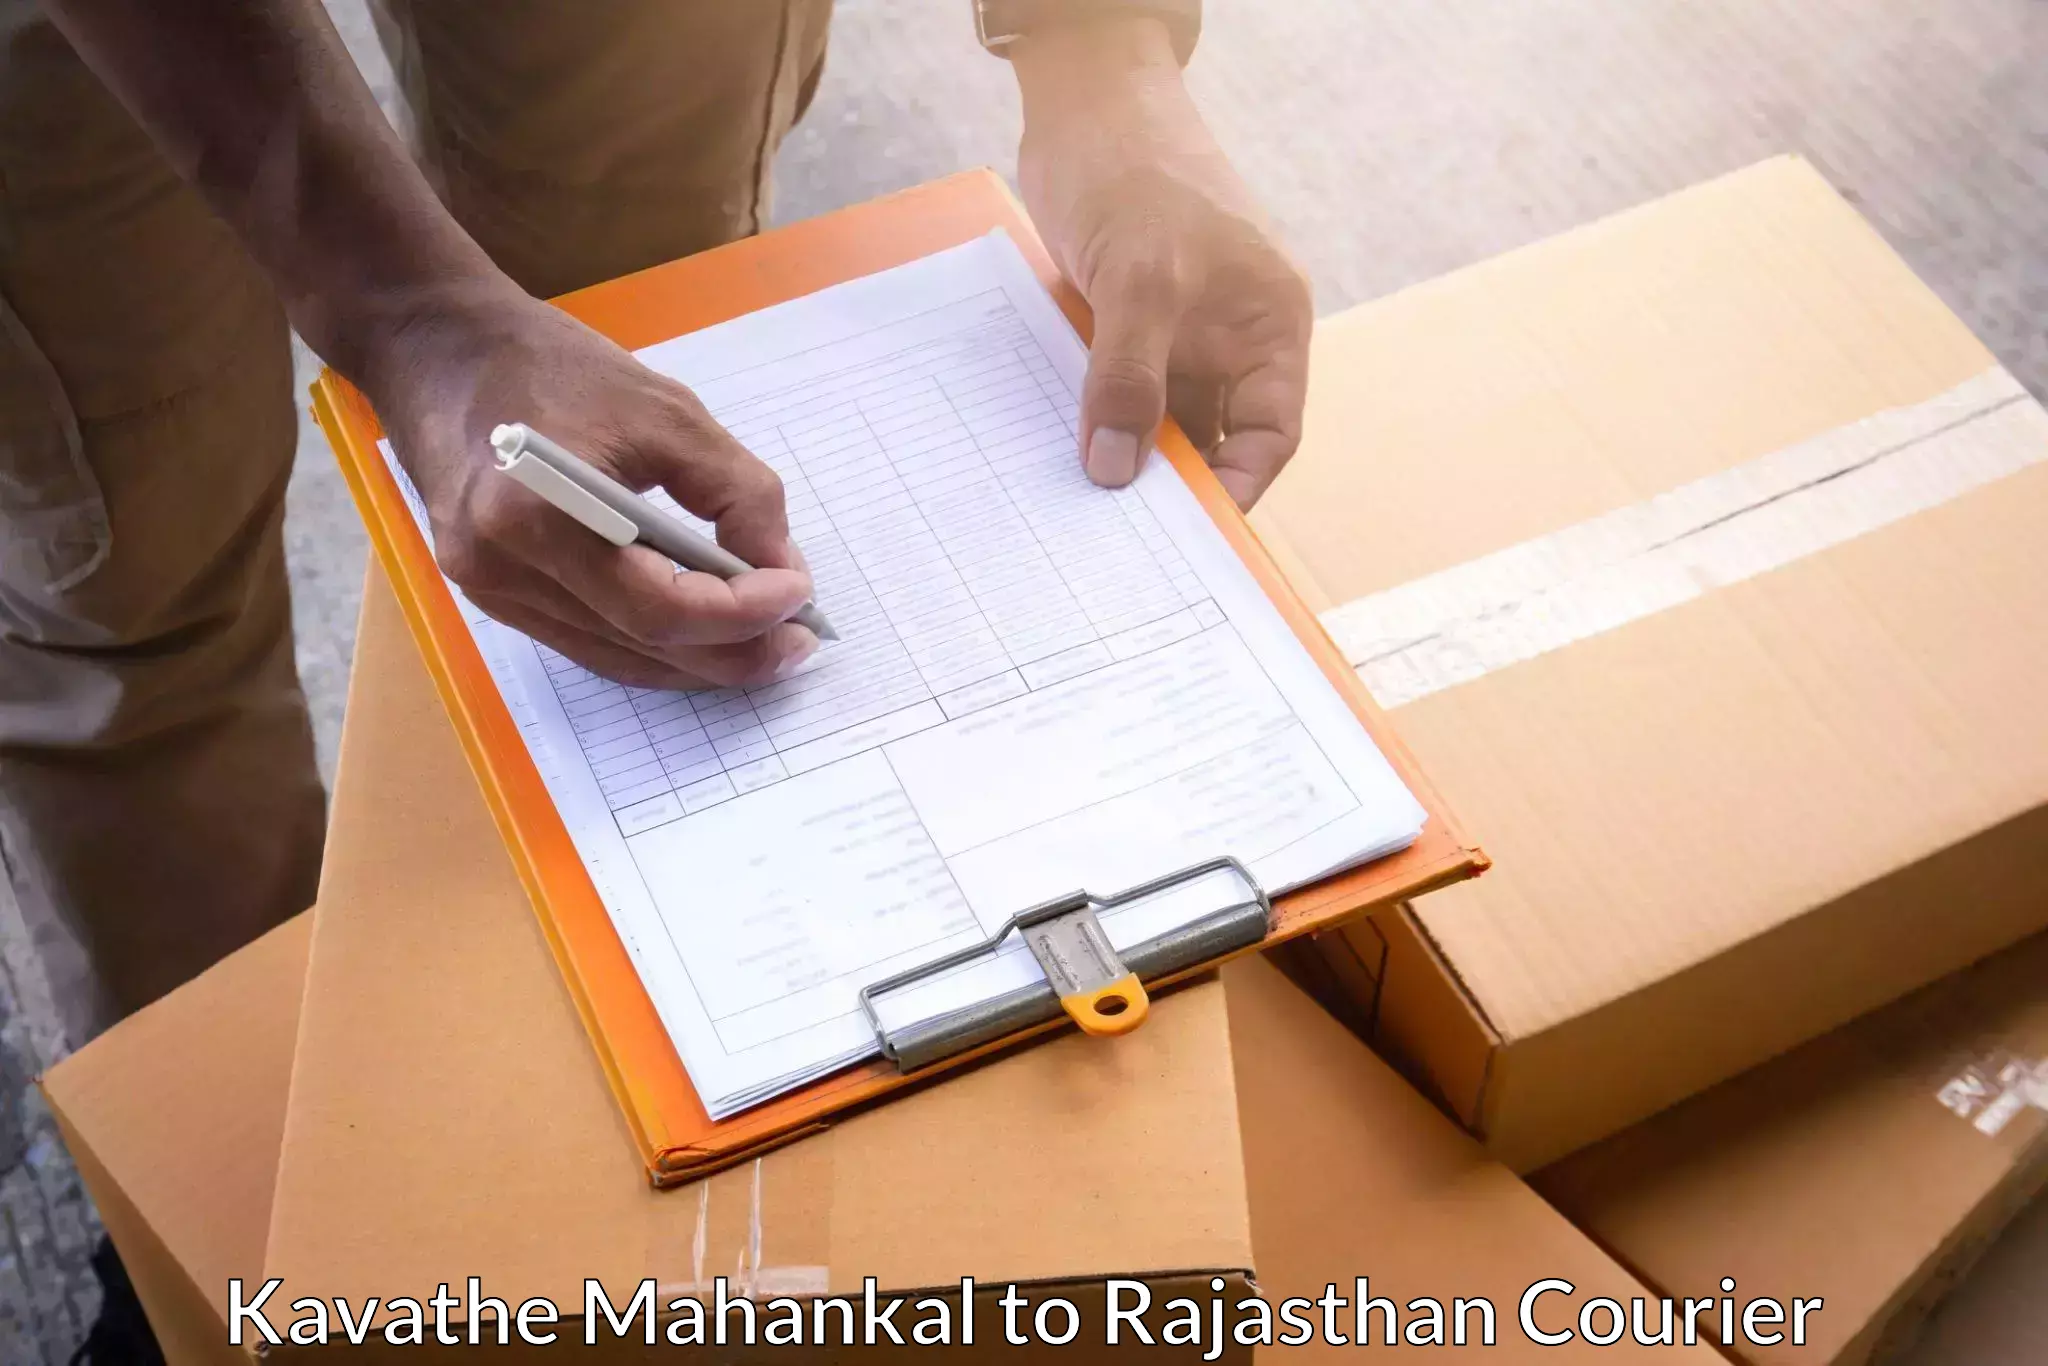 Global courier networks Kavathe Mahankal to Jhalawar